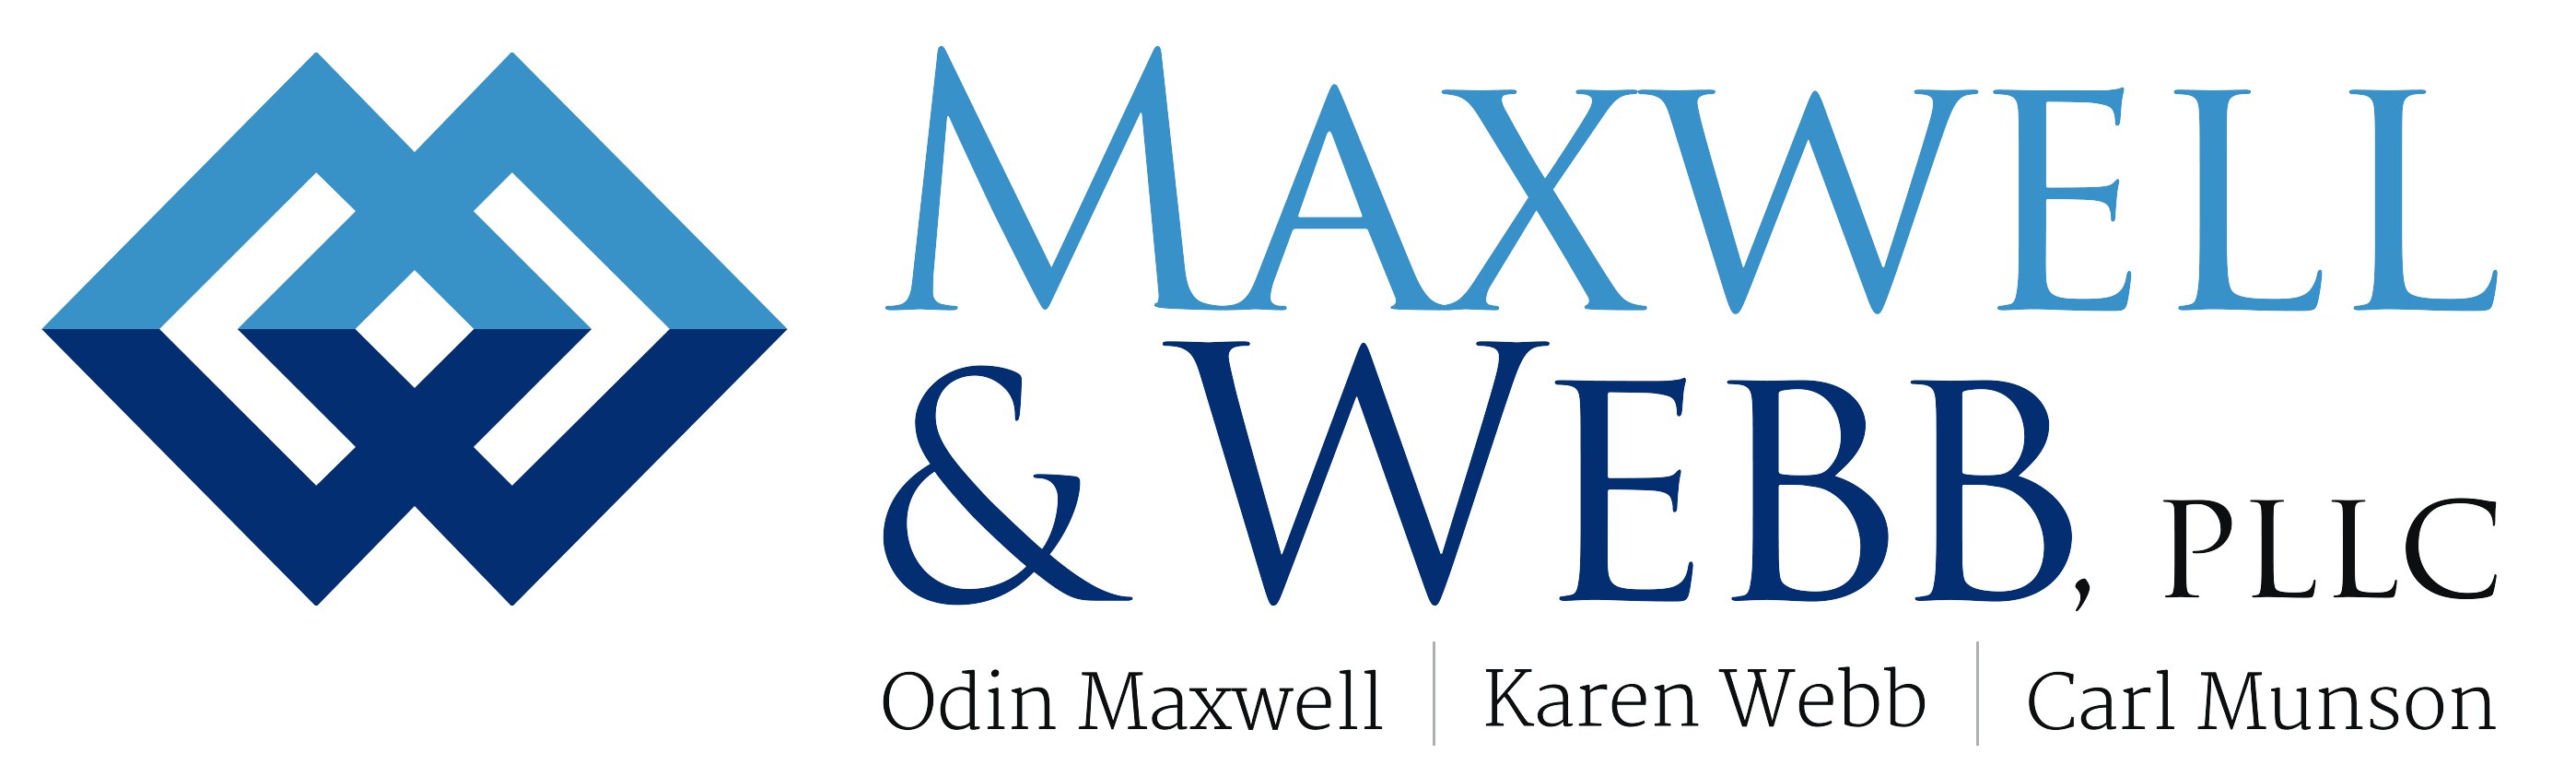 MAXWELL & WEBB